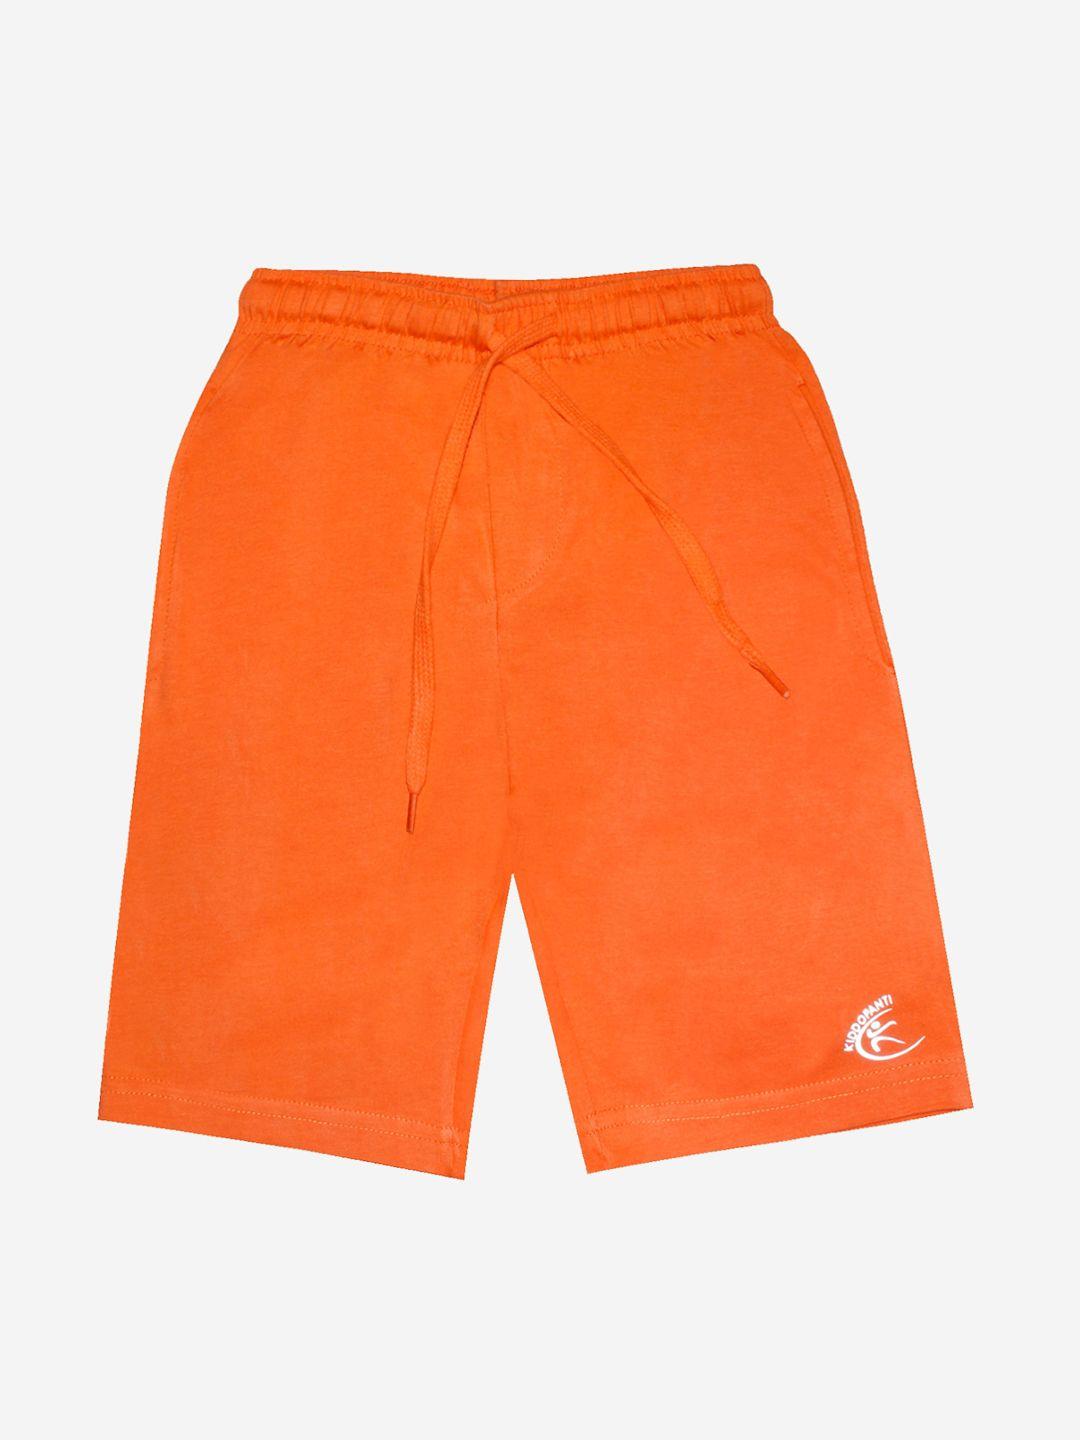 kiddopanti-boys-orange-sports-shorts